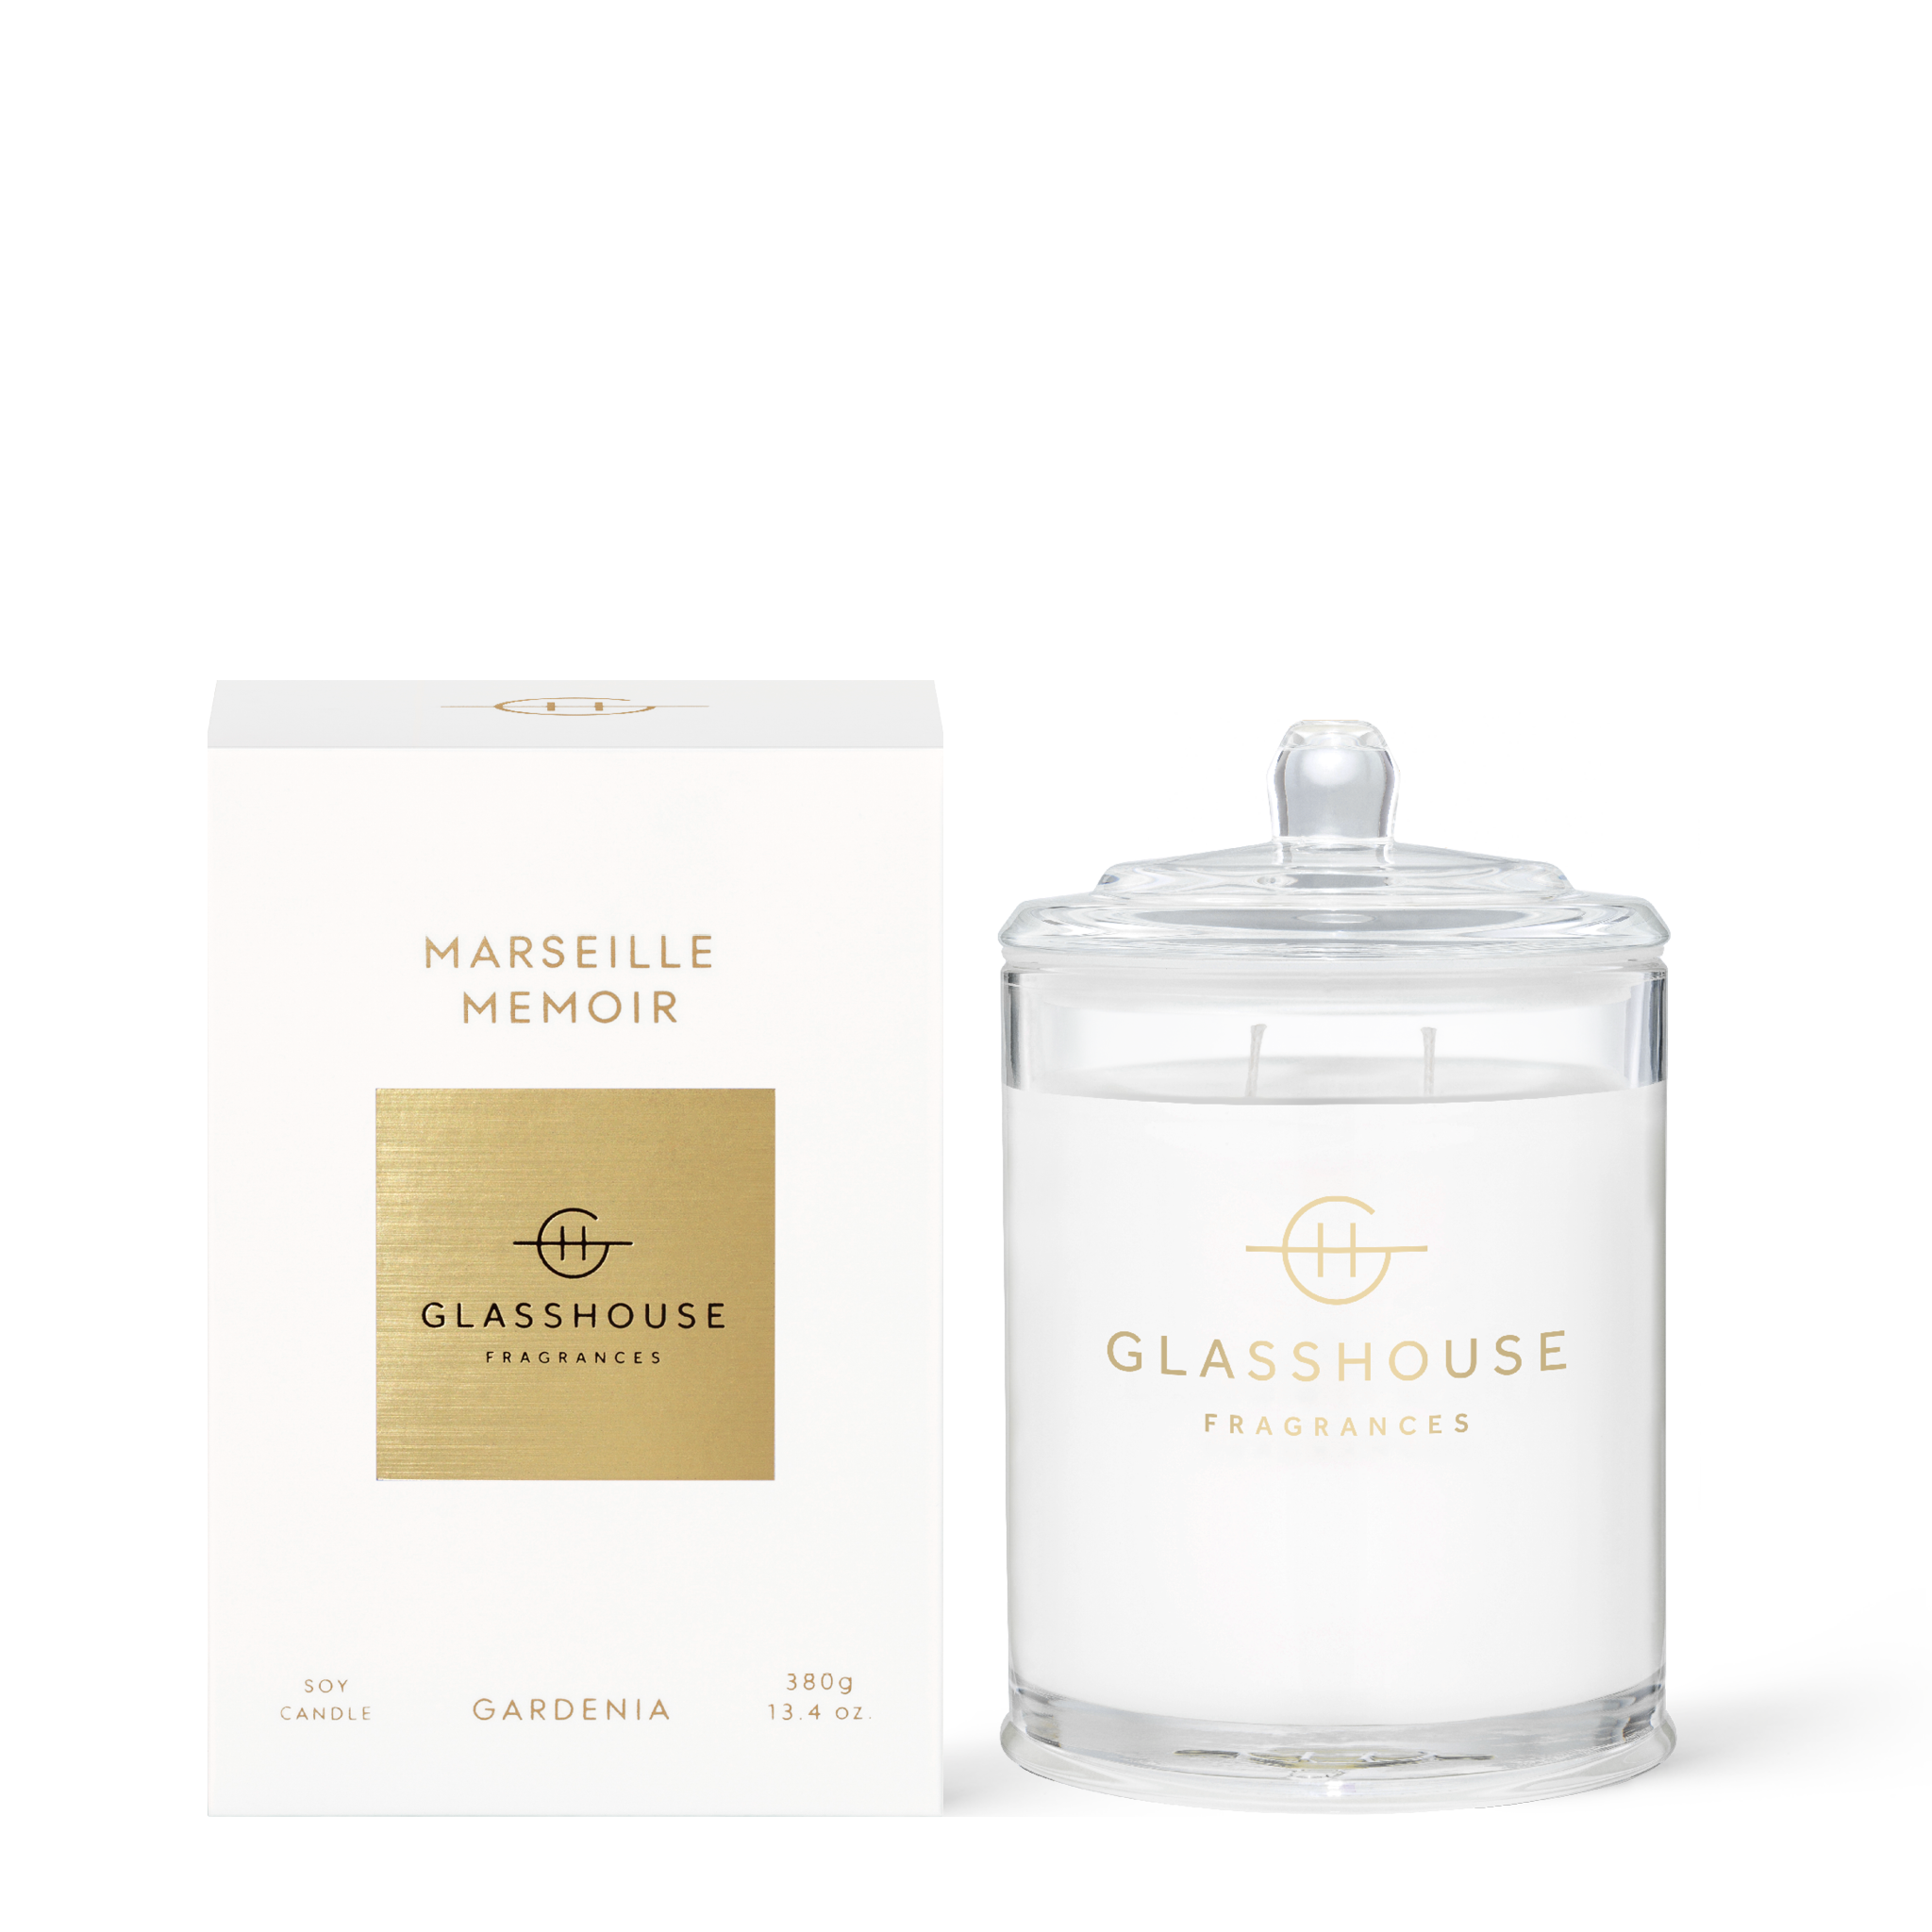 Glasshouse Fragrances Marseille Memoir Gardenia and Saffron 380g Soy Candle with box